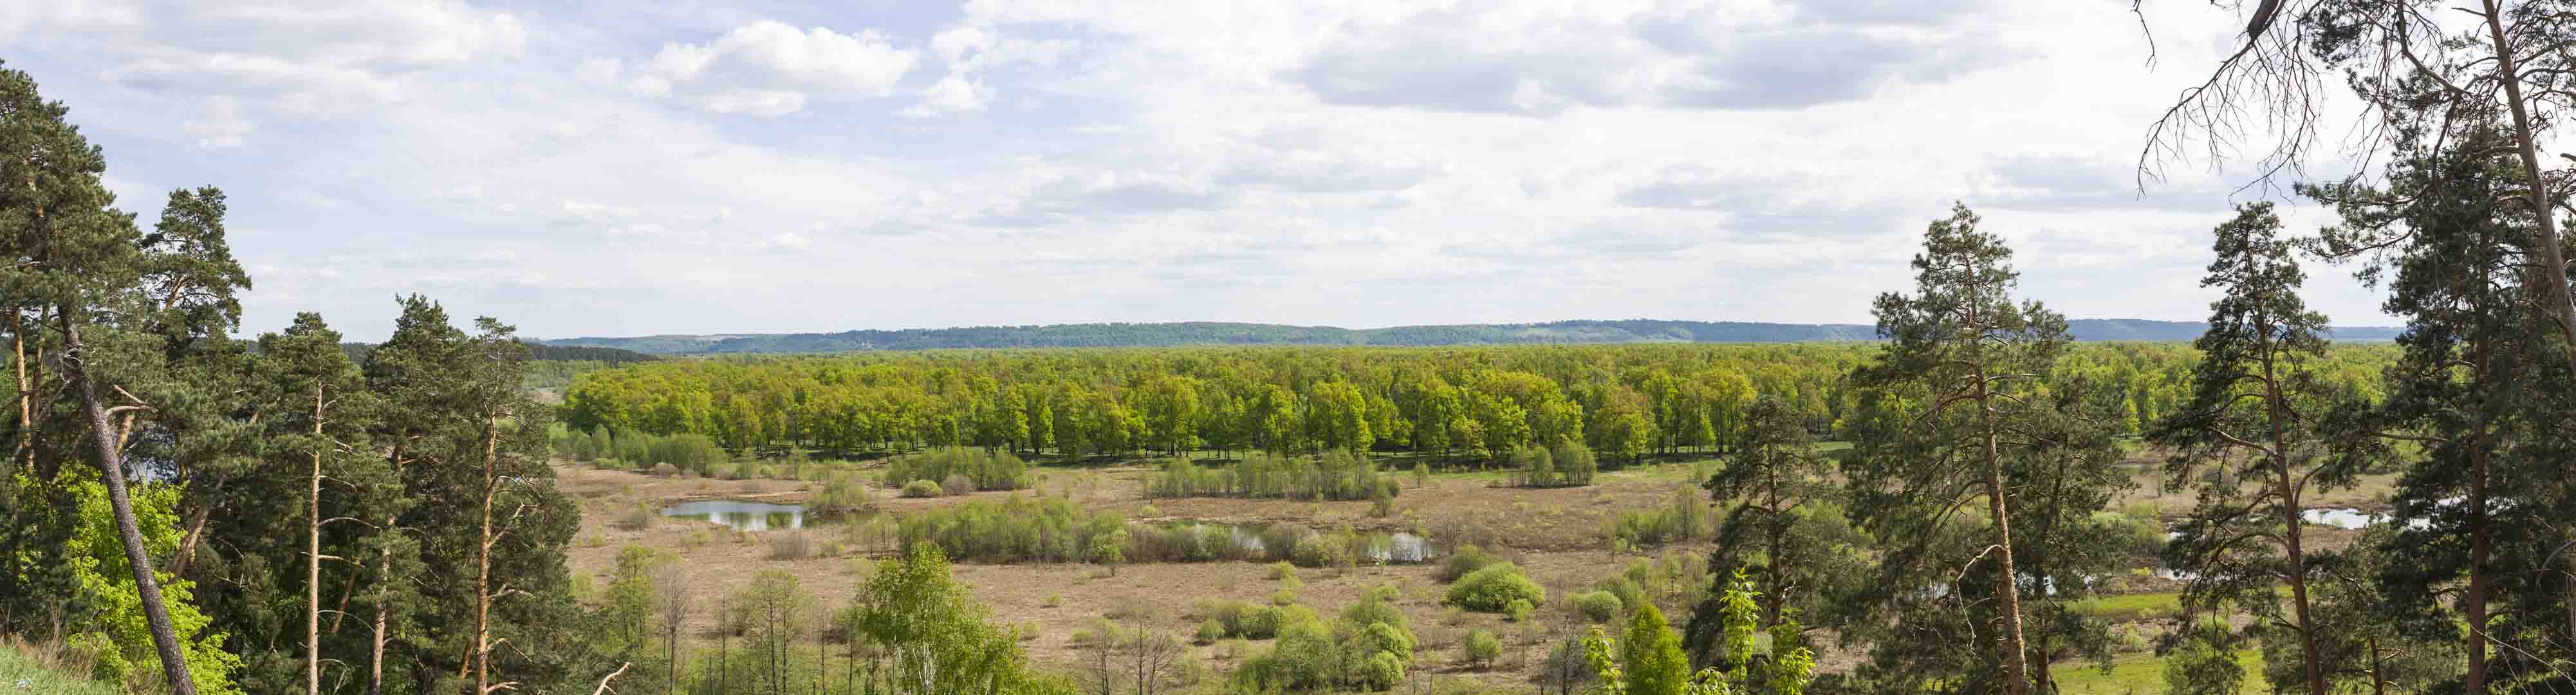 Scenic View near Oka River in Dzerzhinsk, Nizhegorodskaya Oblast – Russia